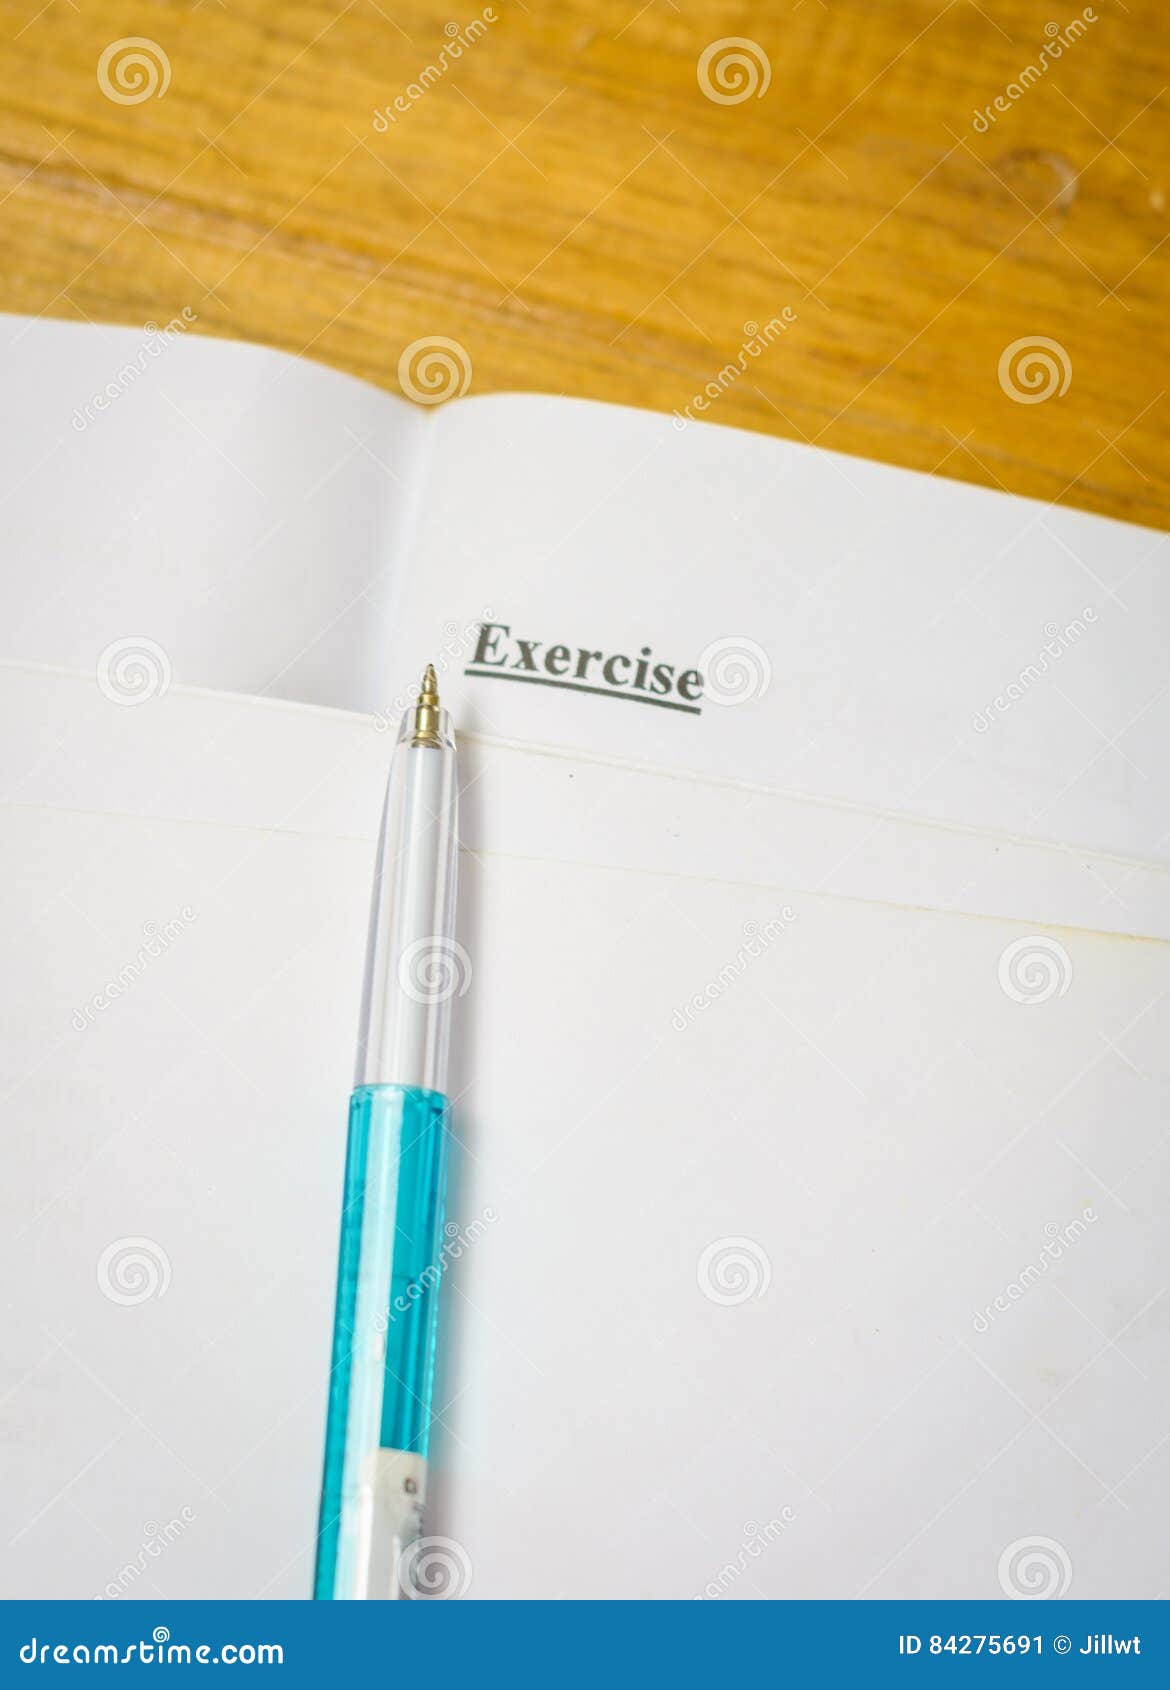 Fitness essays